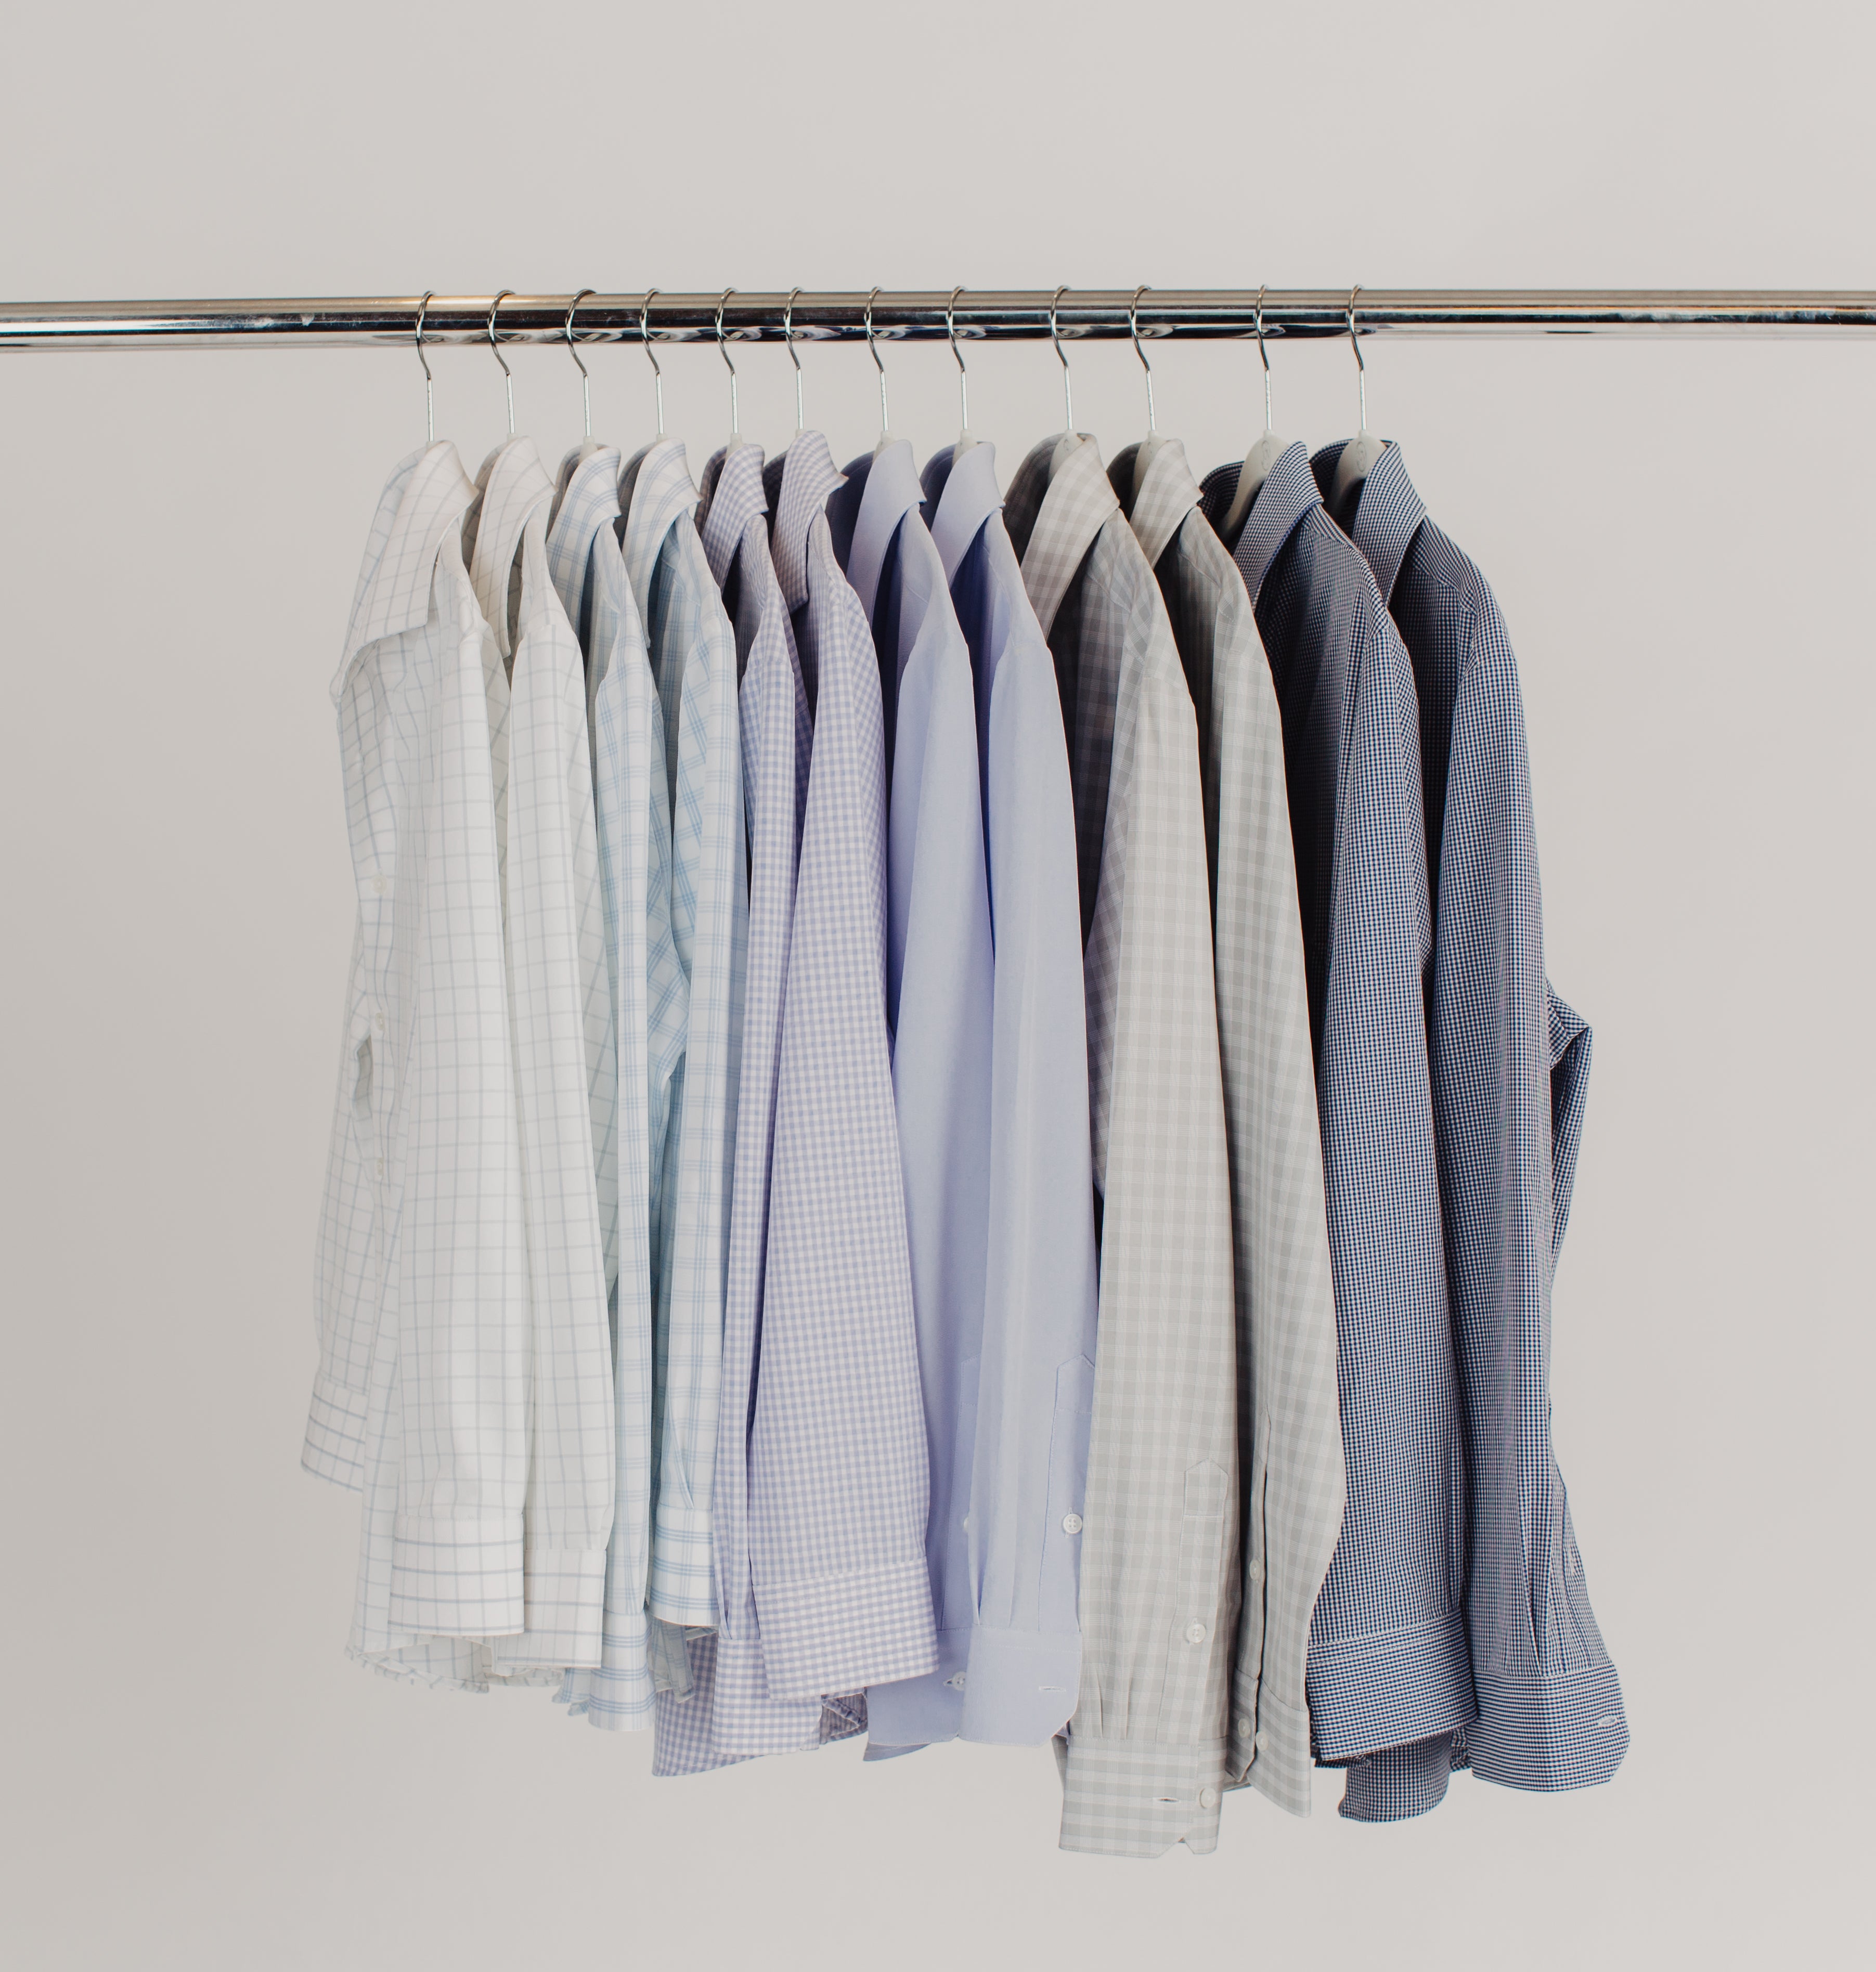 clothes rack with various dress shirts